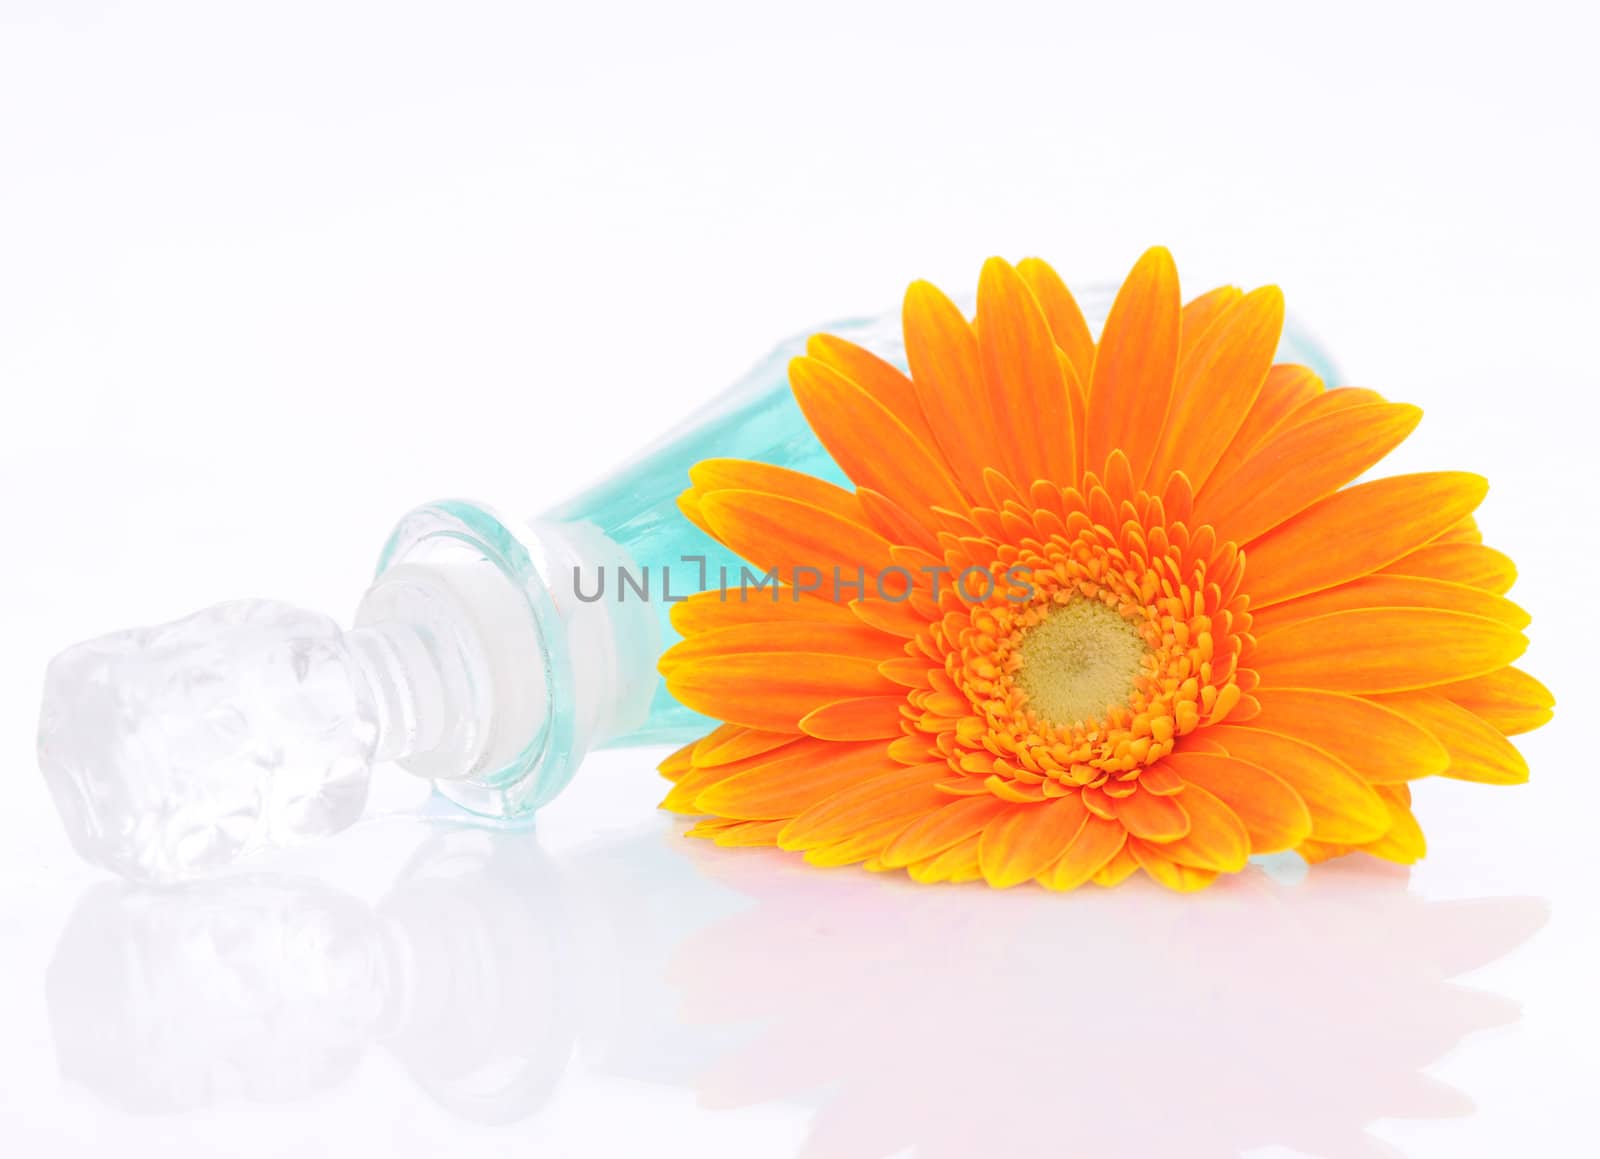 women's perfume in beautiful bottle and flower